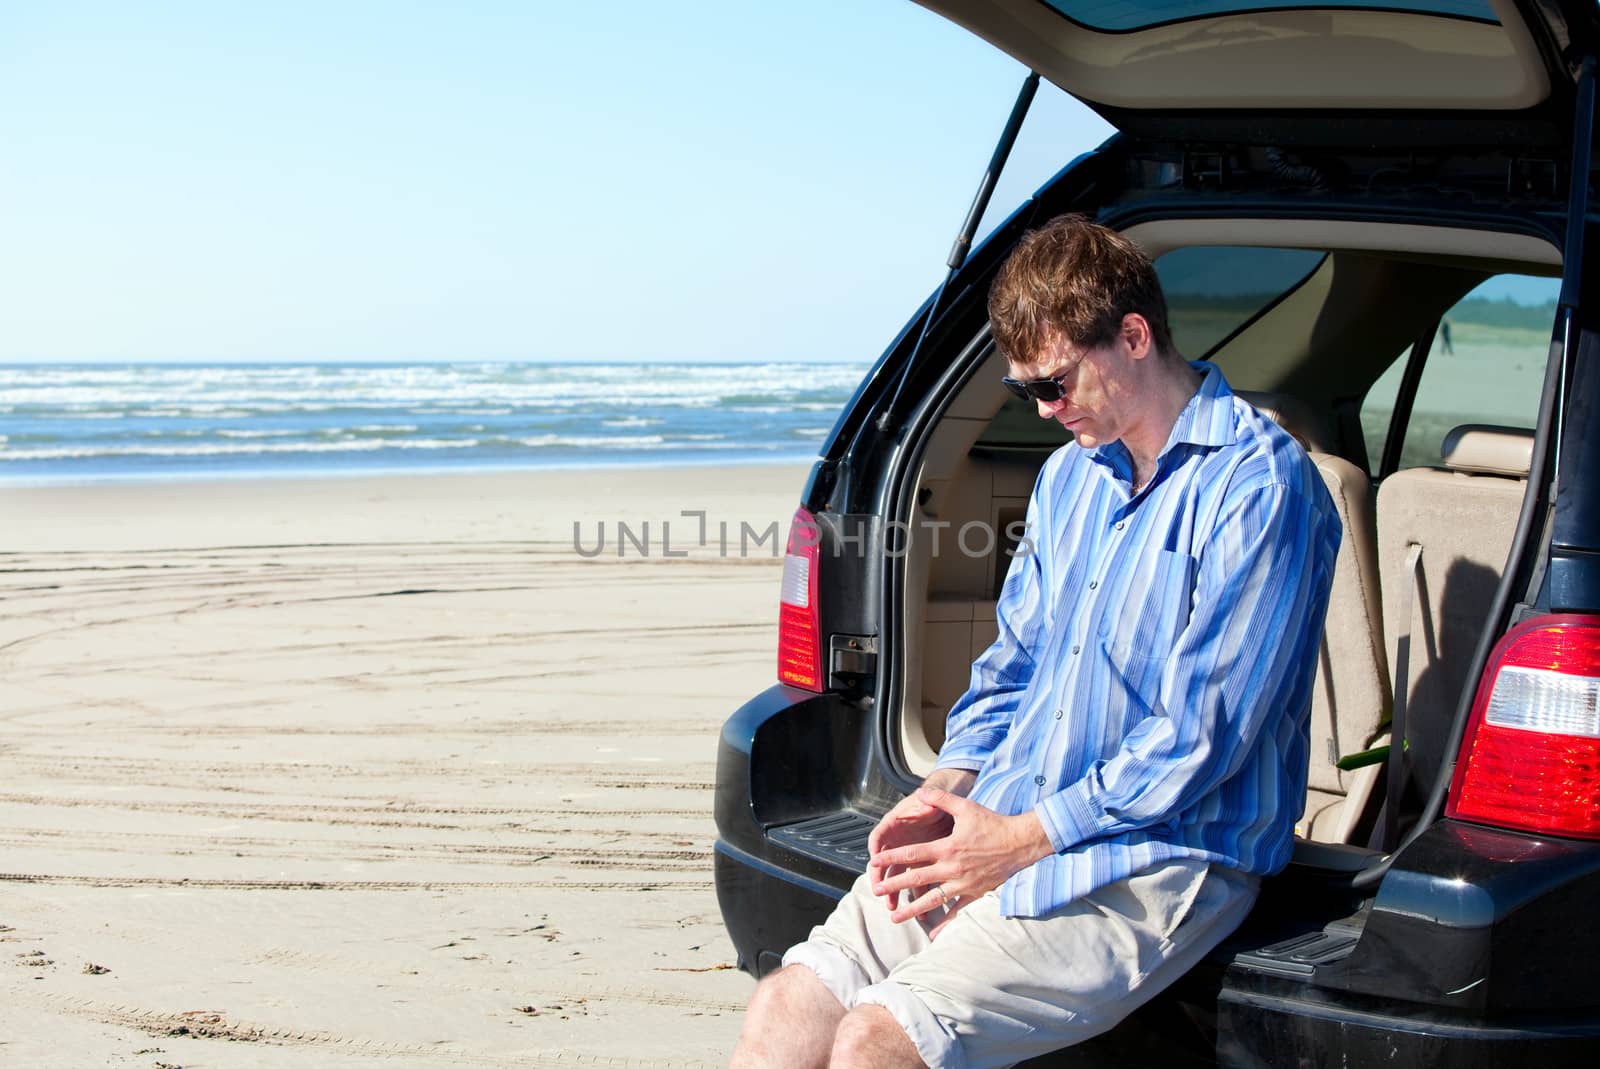 Caucasian man in car at beach, unhappy, worried expression by jarenwicklund